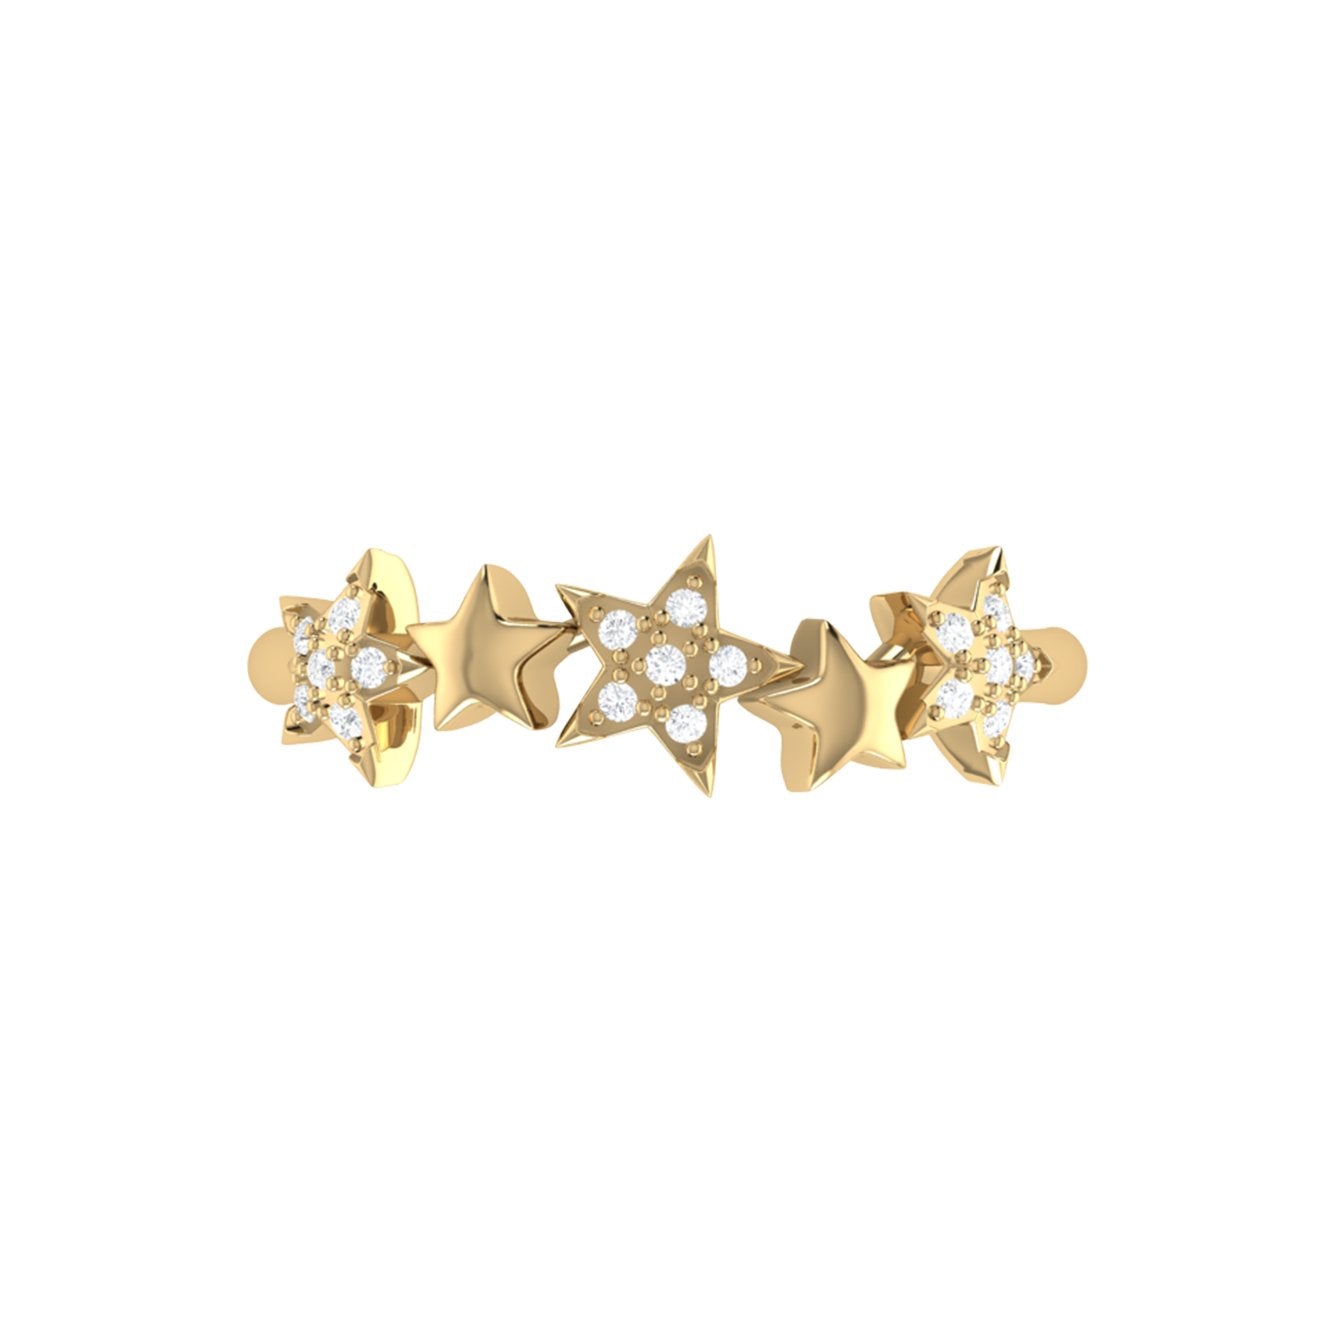 Sparkling Starry Lane Diamond Ring in 14K Yellow Gold - Jewelry & Watches - Bijou Her -  -  - 